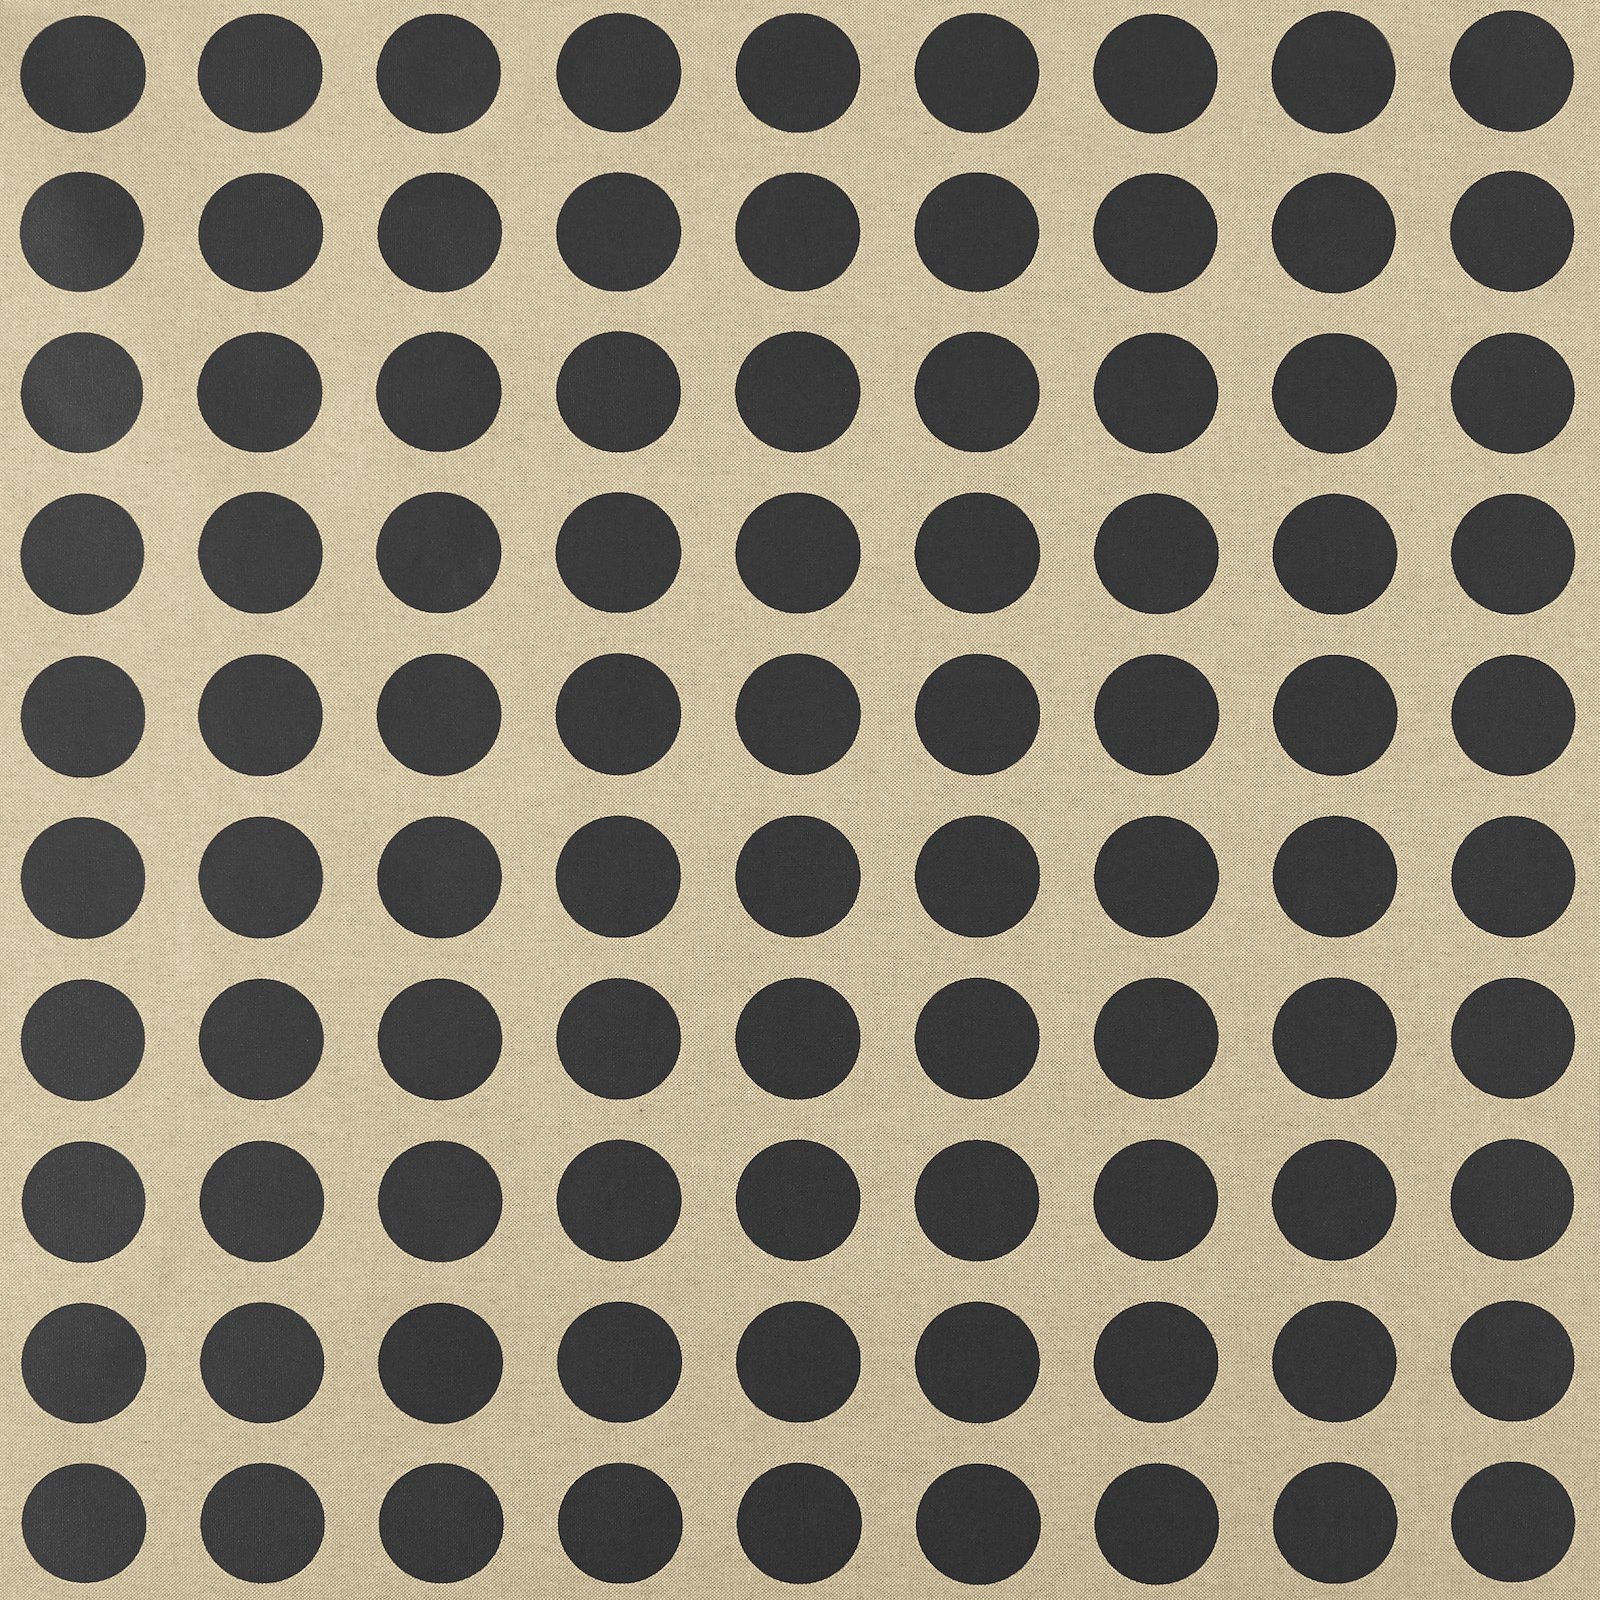 Woven oilcloth linenlook w black dots 870368_pack_sp